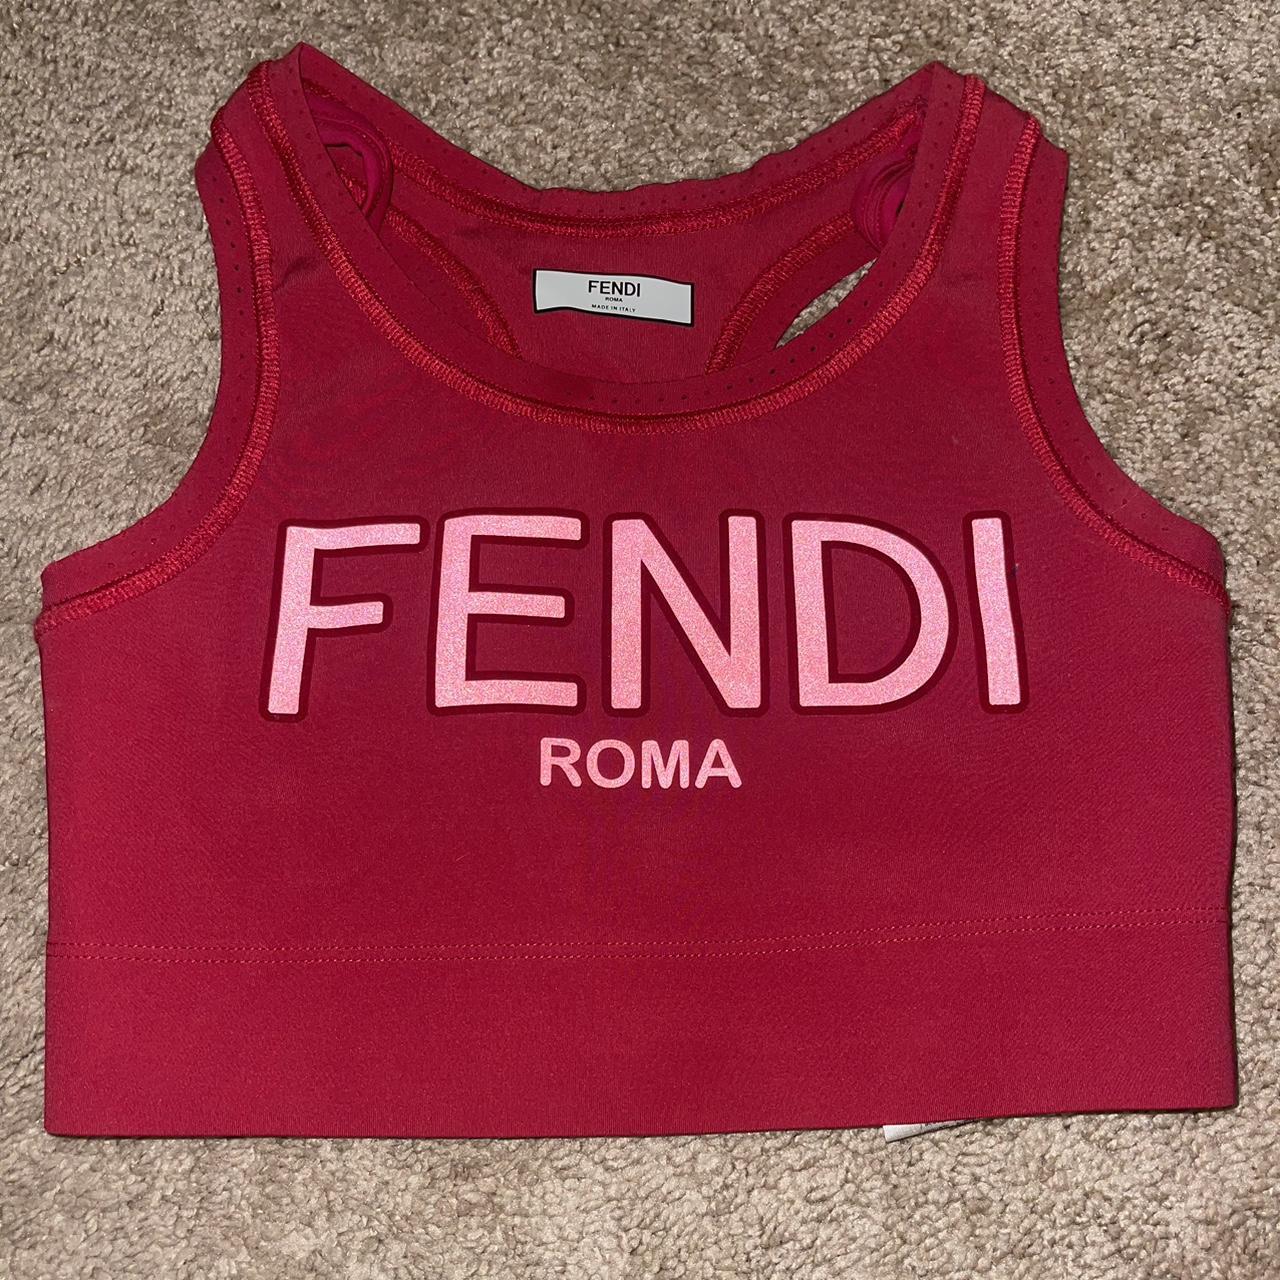 Red Fendi Roma sports bra - Depop